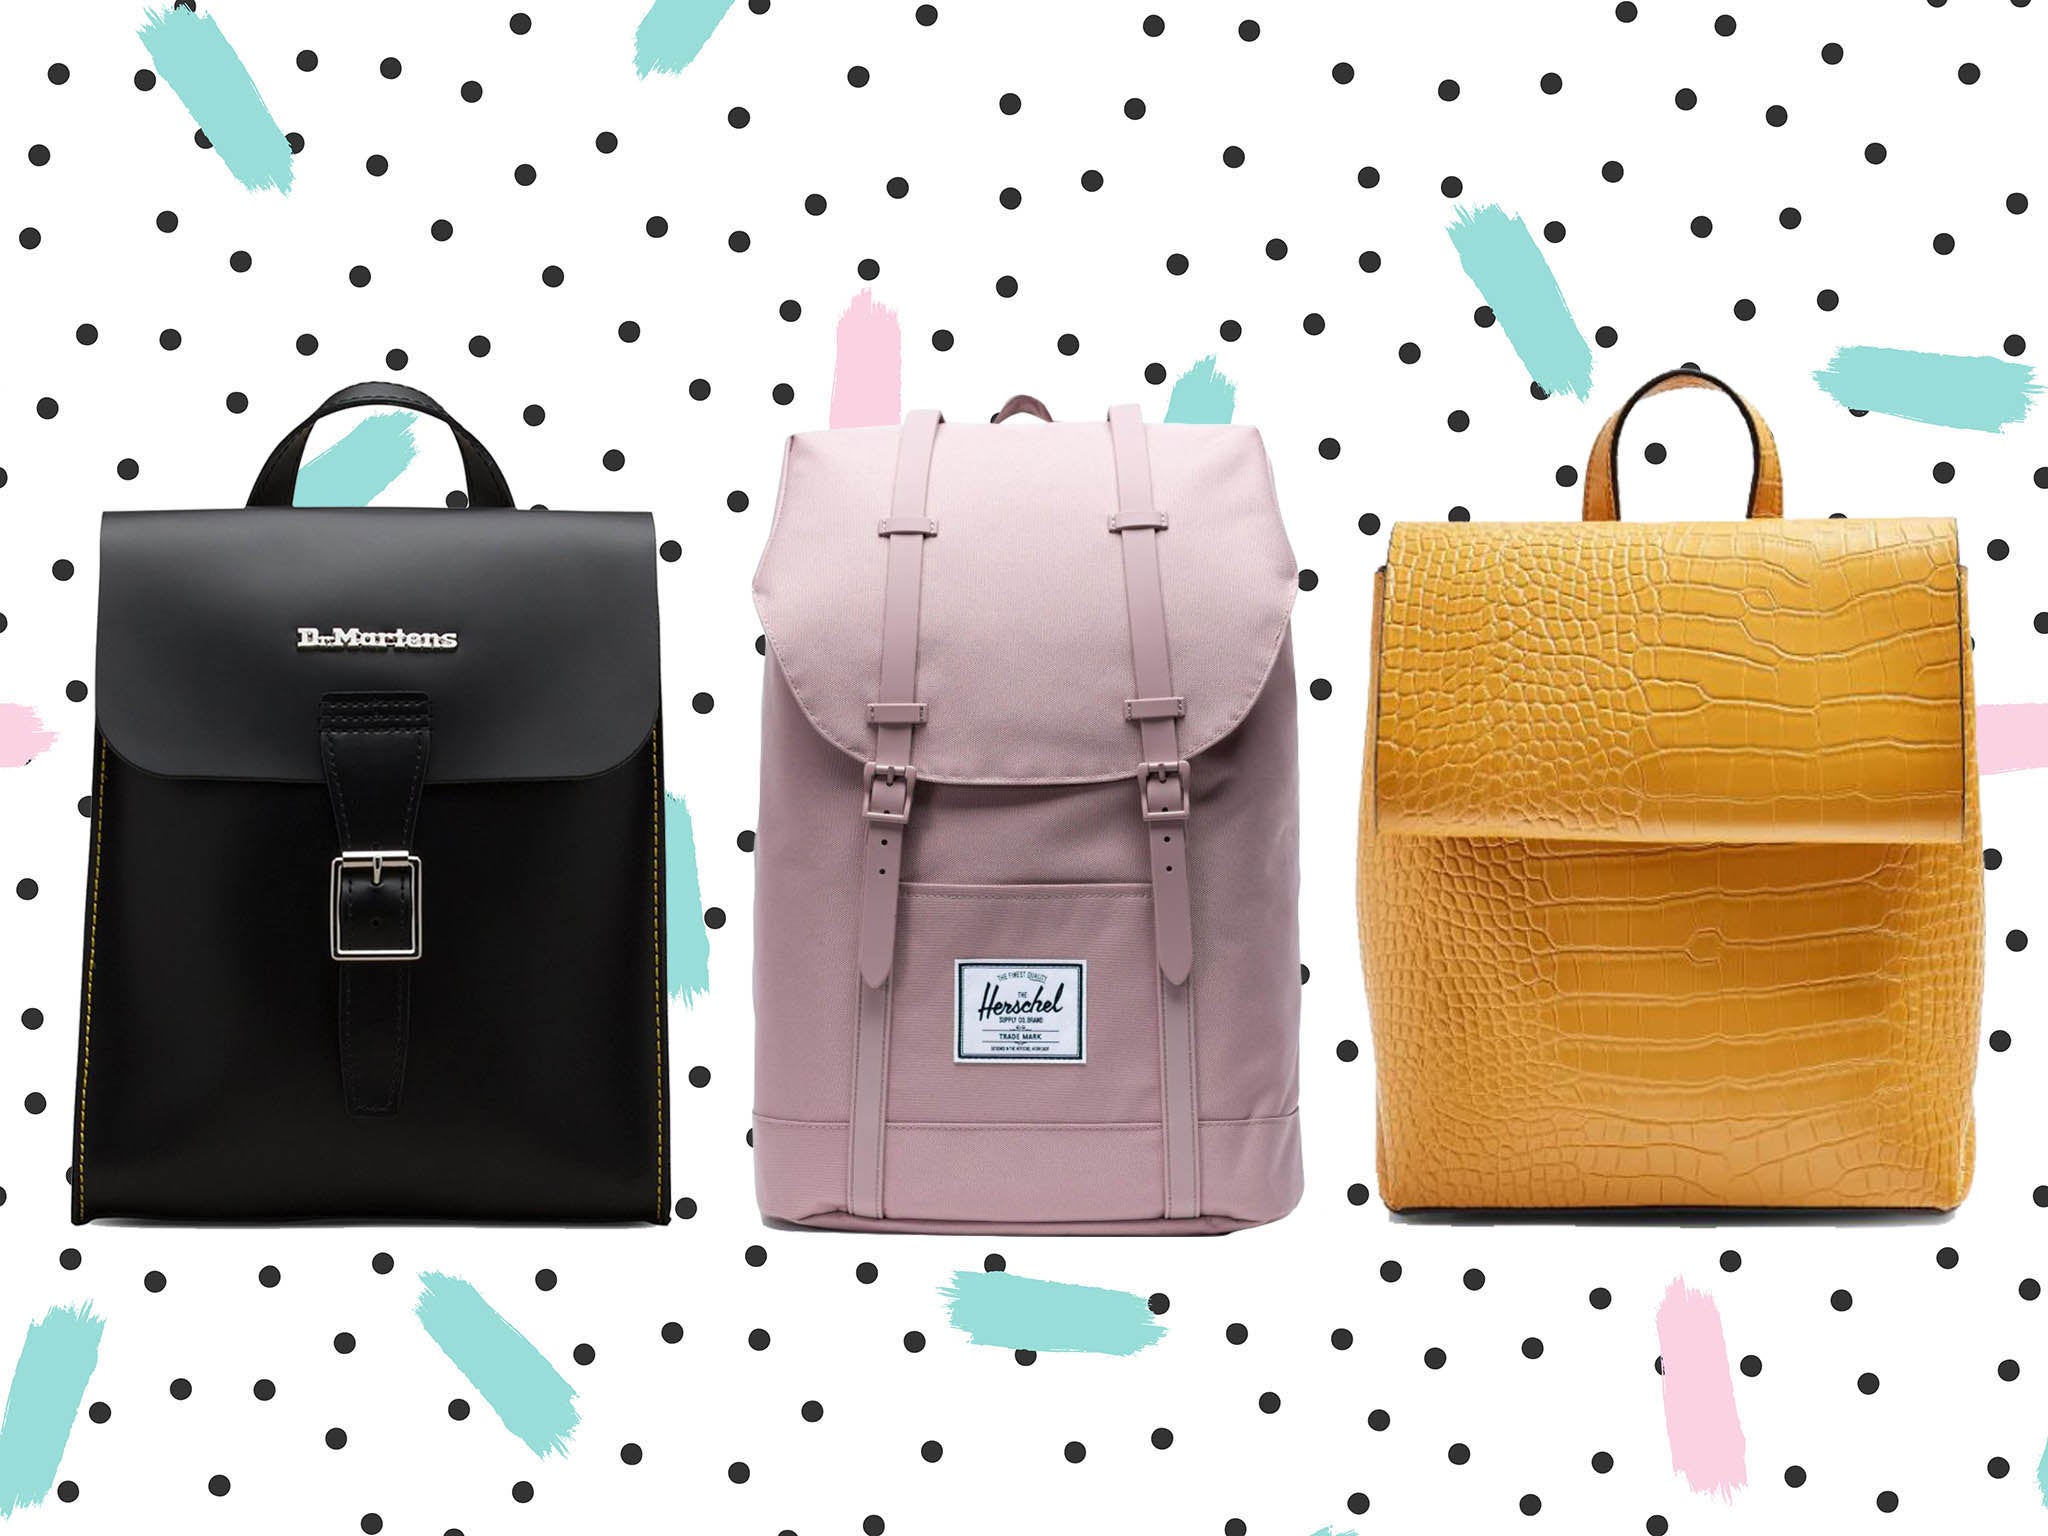 School Bag Shopping Bag Travel Bag Storage Bag For Men Women Girls Boys Personalized Pattern Classical Beauty Backpack 